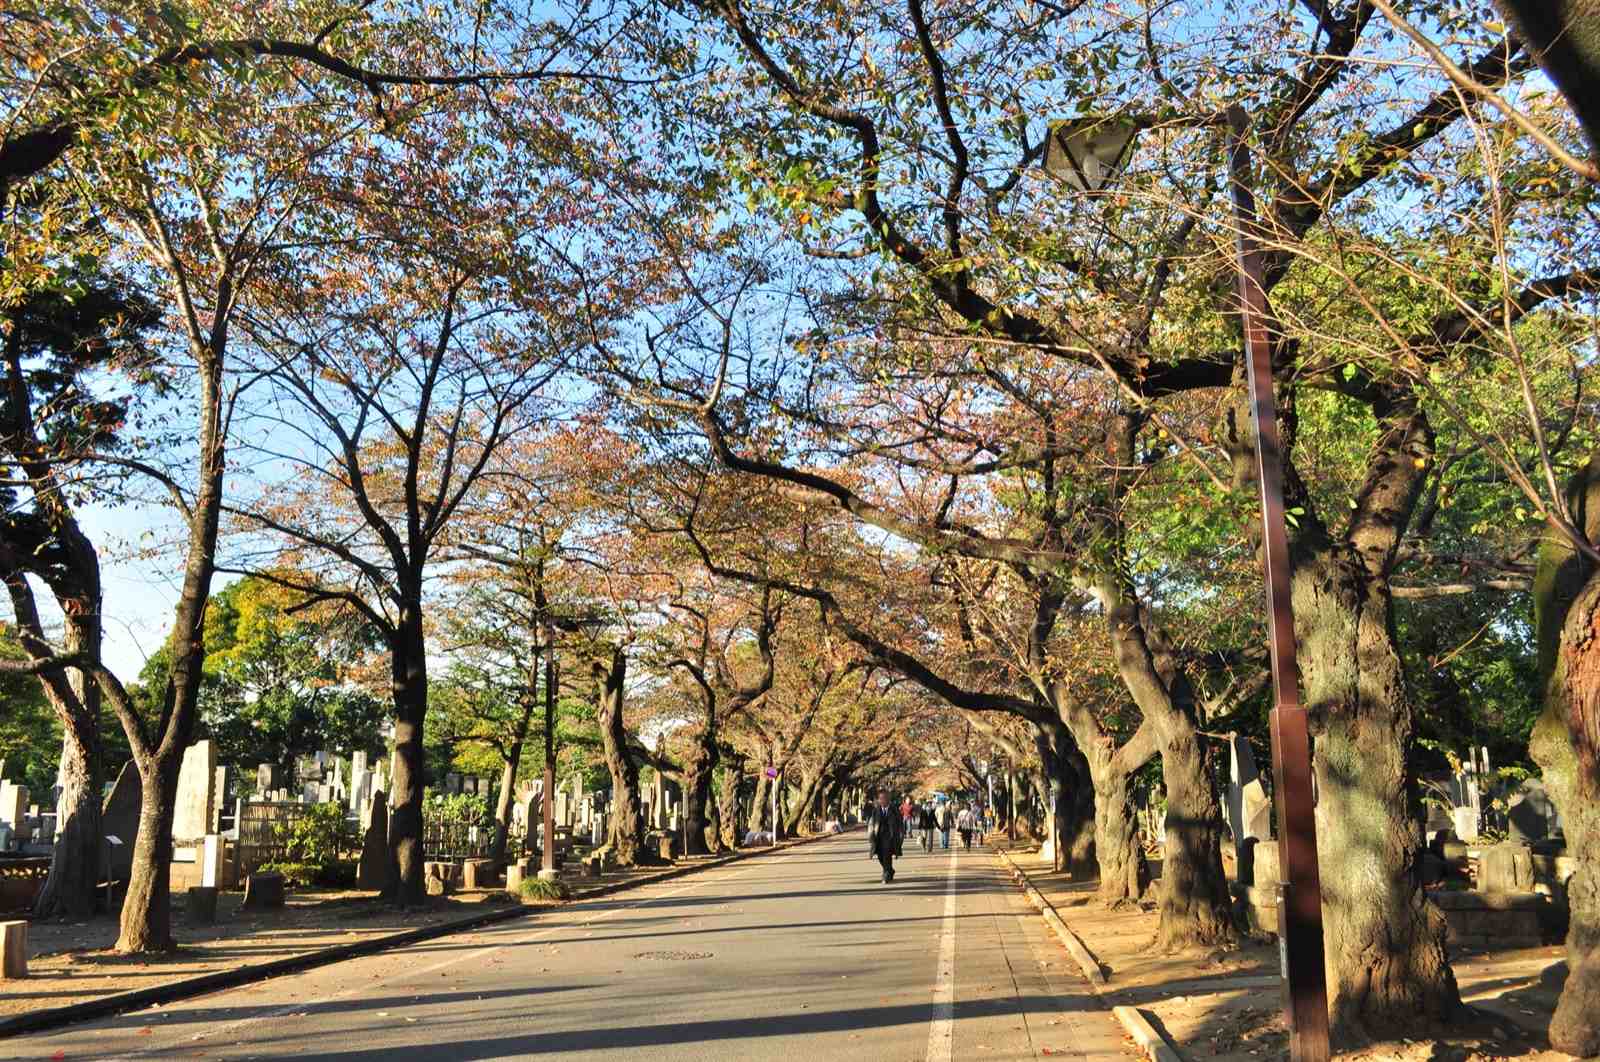 Photo of Yanaka Cemetery, Japan (Tokyo - Yanaka 050 - Yanaka Cemetery by Joe Mabel)